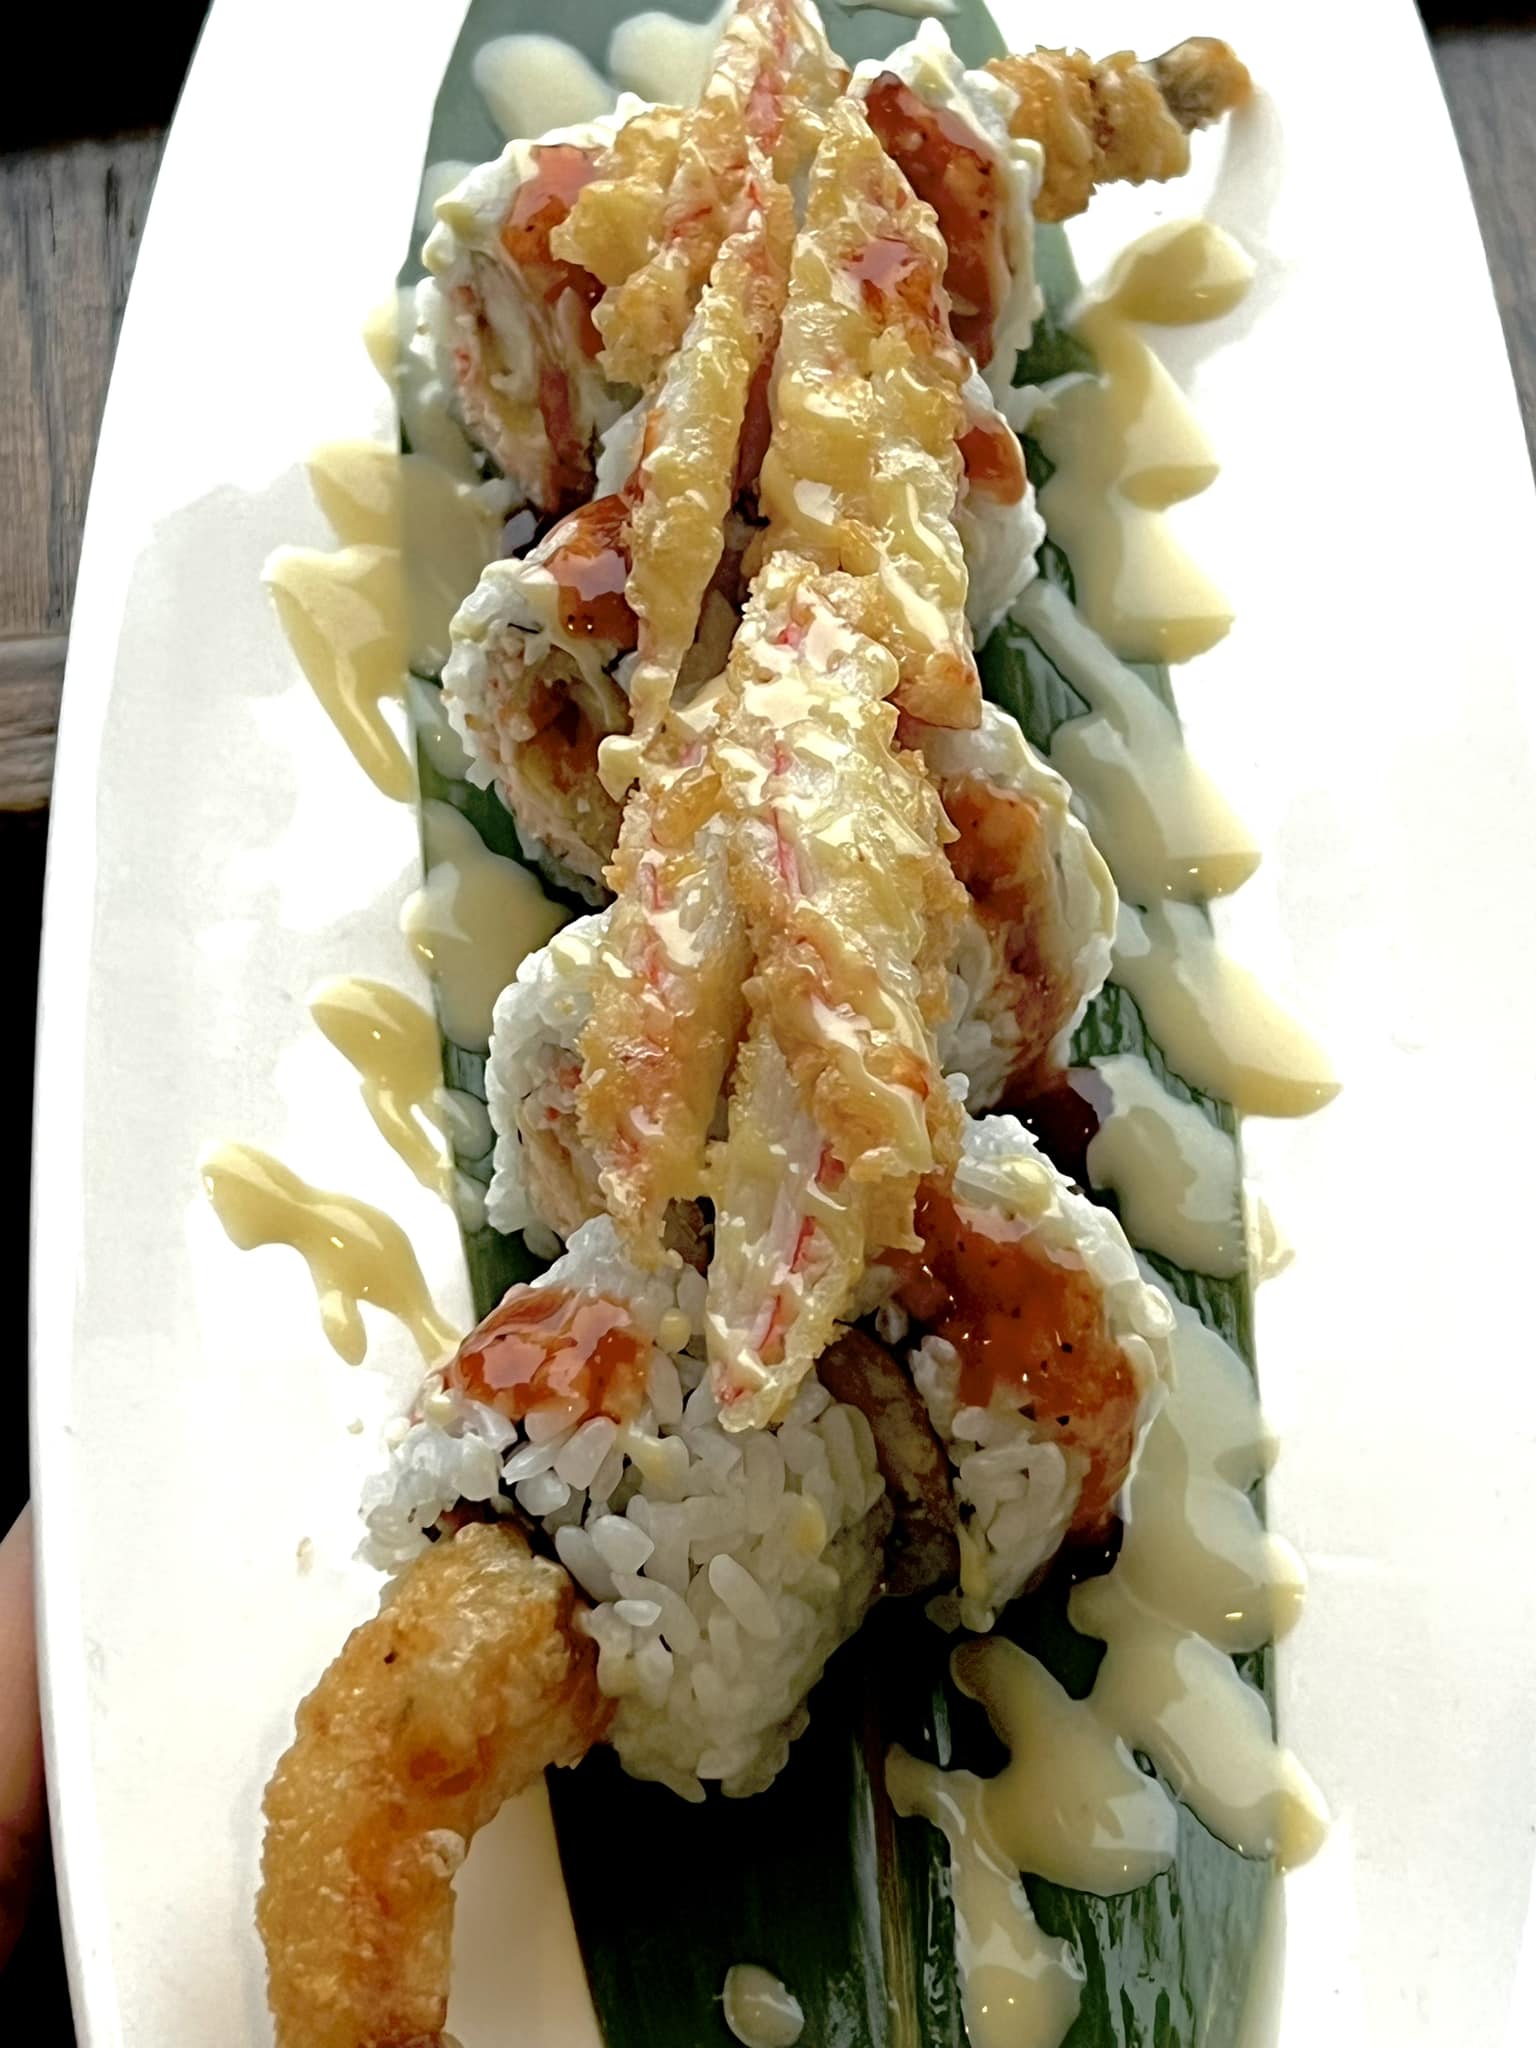 Ichiban Sushi Bar